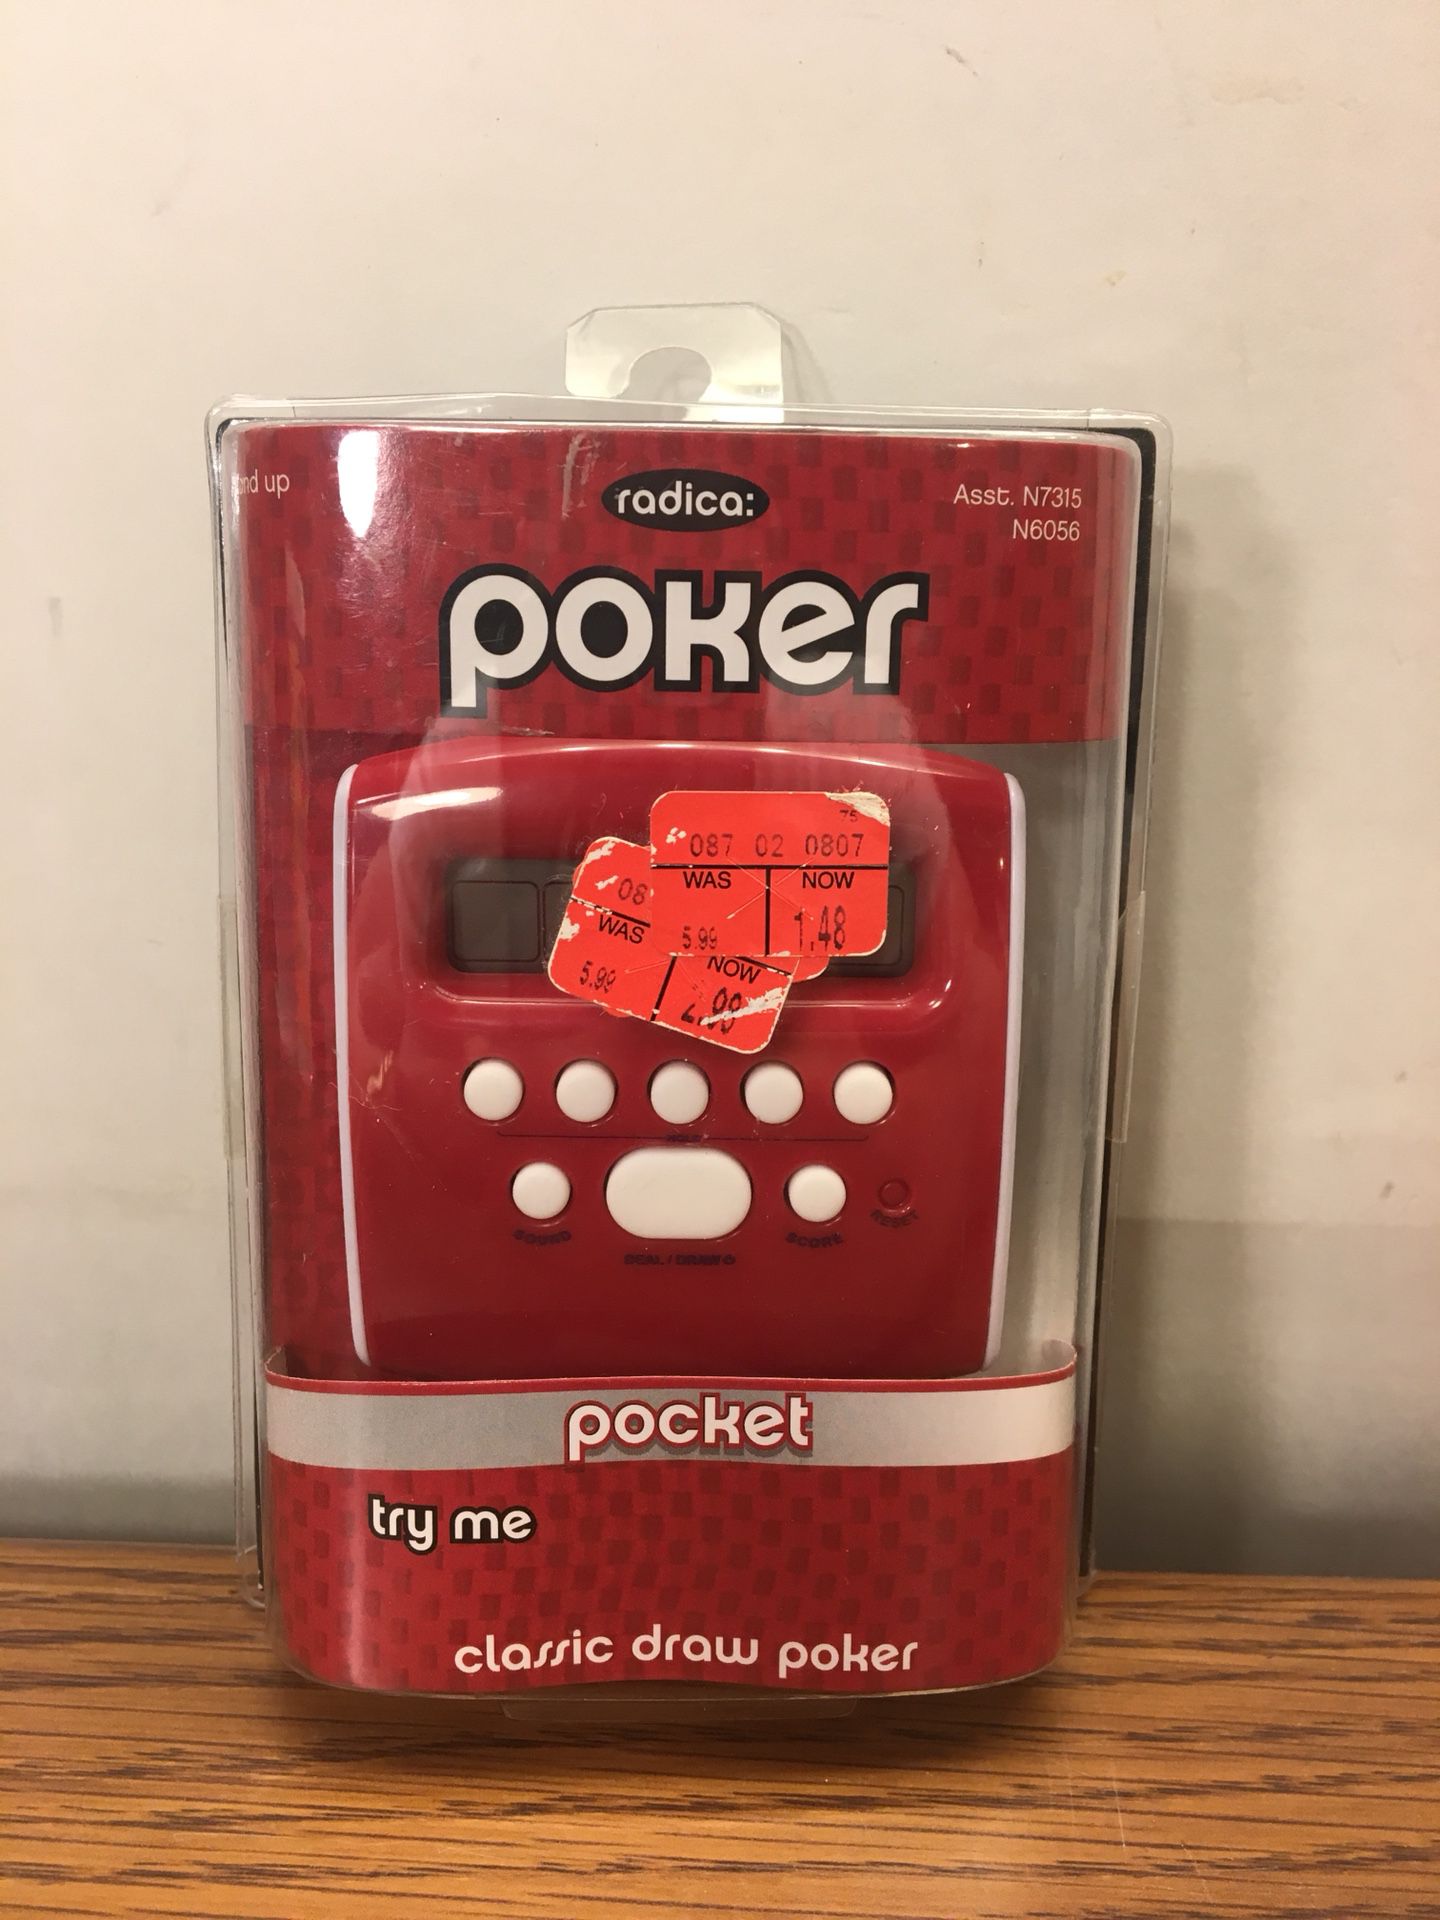 Pocket Poker Classic Draw Poker Handheld Radica 2008 New